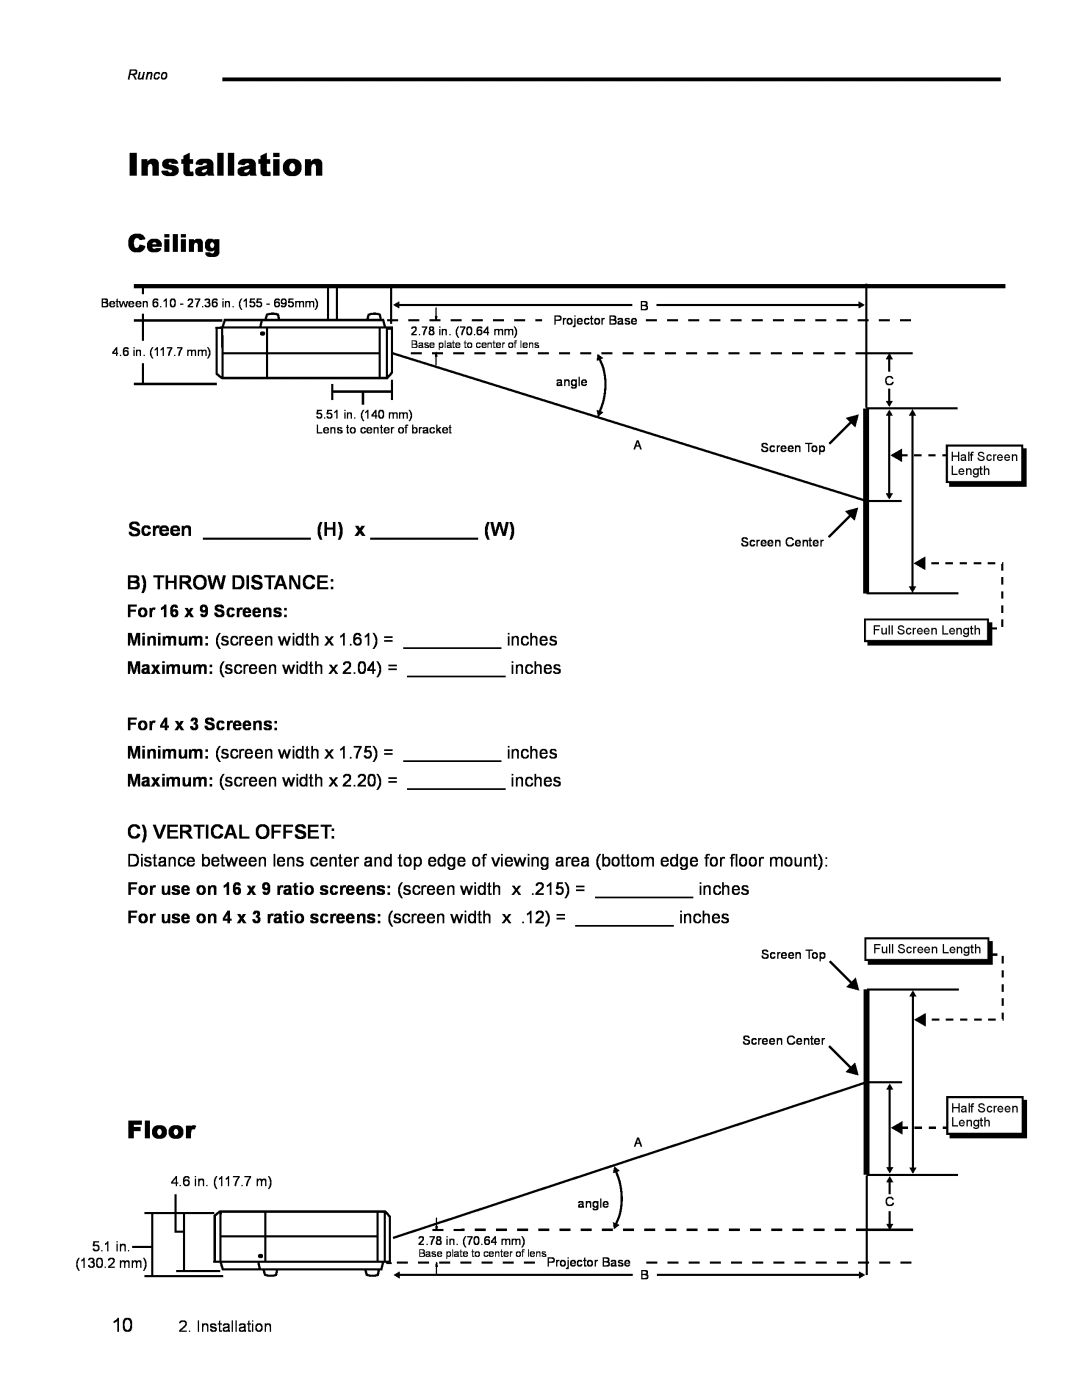 Runco CL-500 manual Installation, Screen H x W, B Throw Distance, C Vertical Offset, Ceiling, Floor, For 16 x 9 Screens 